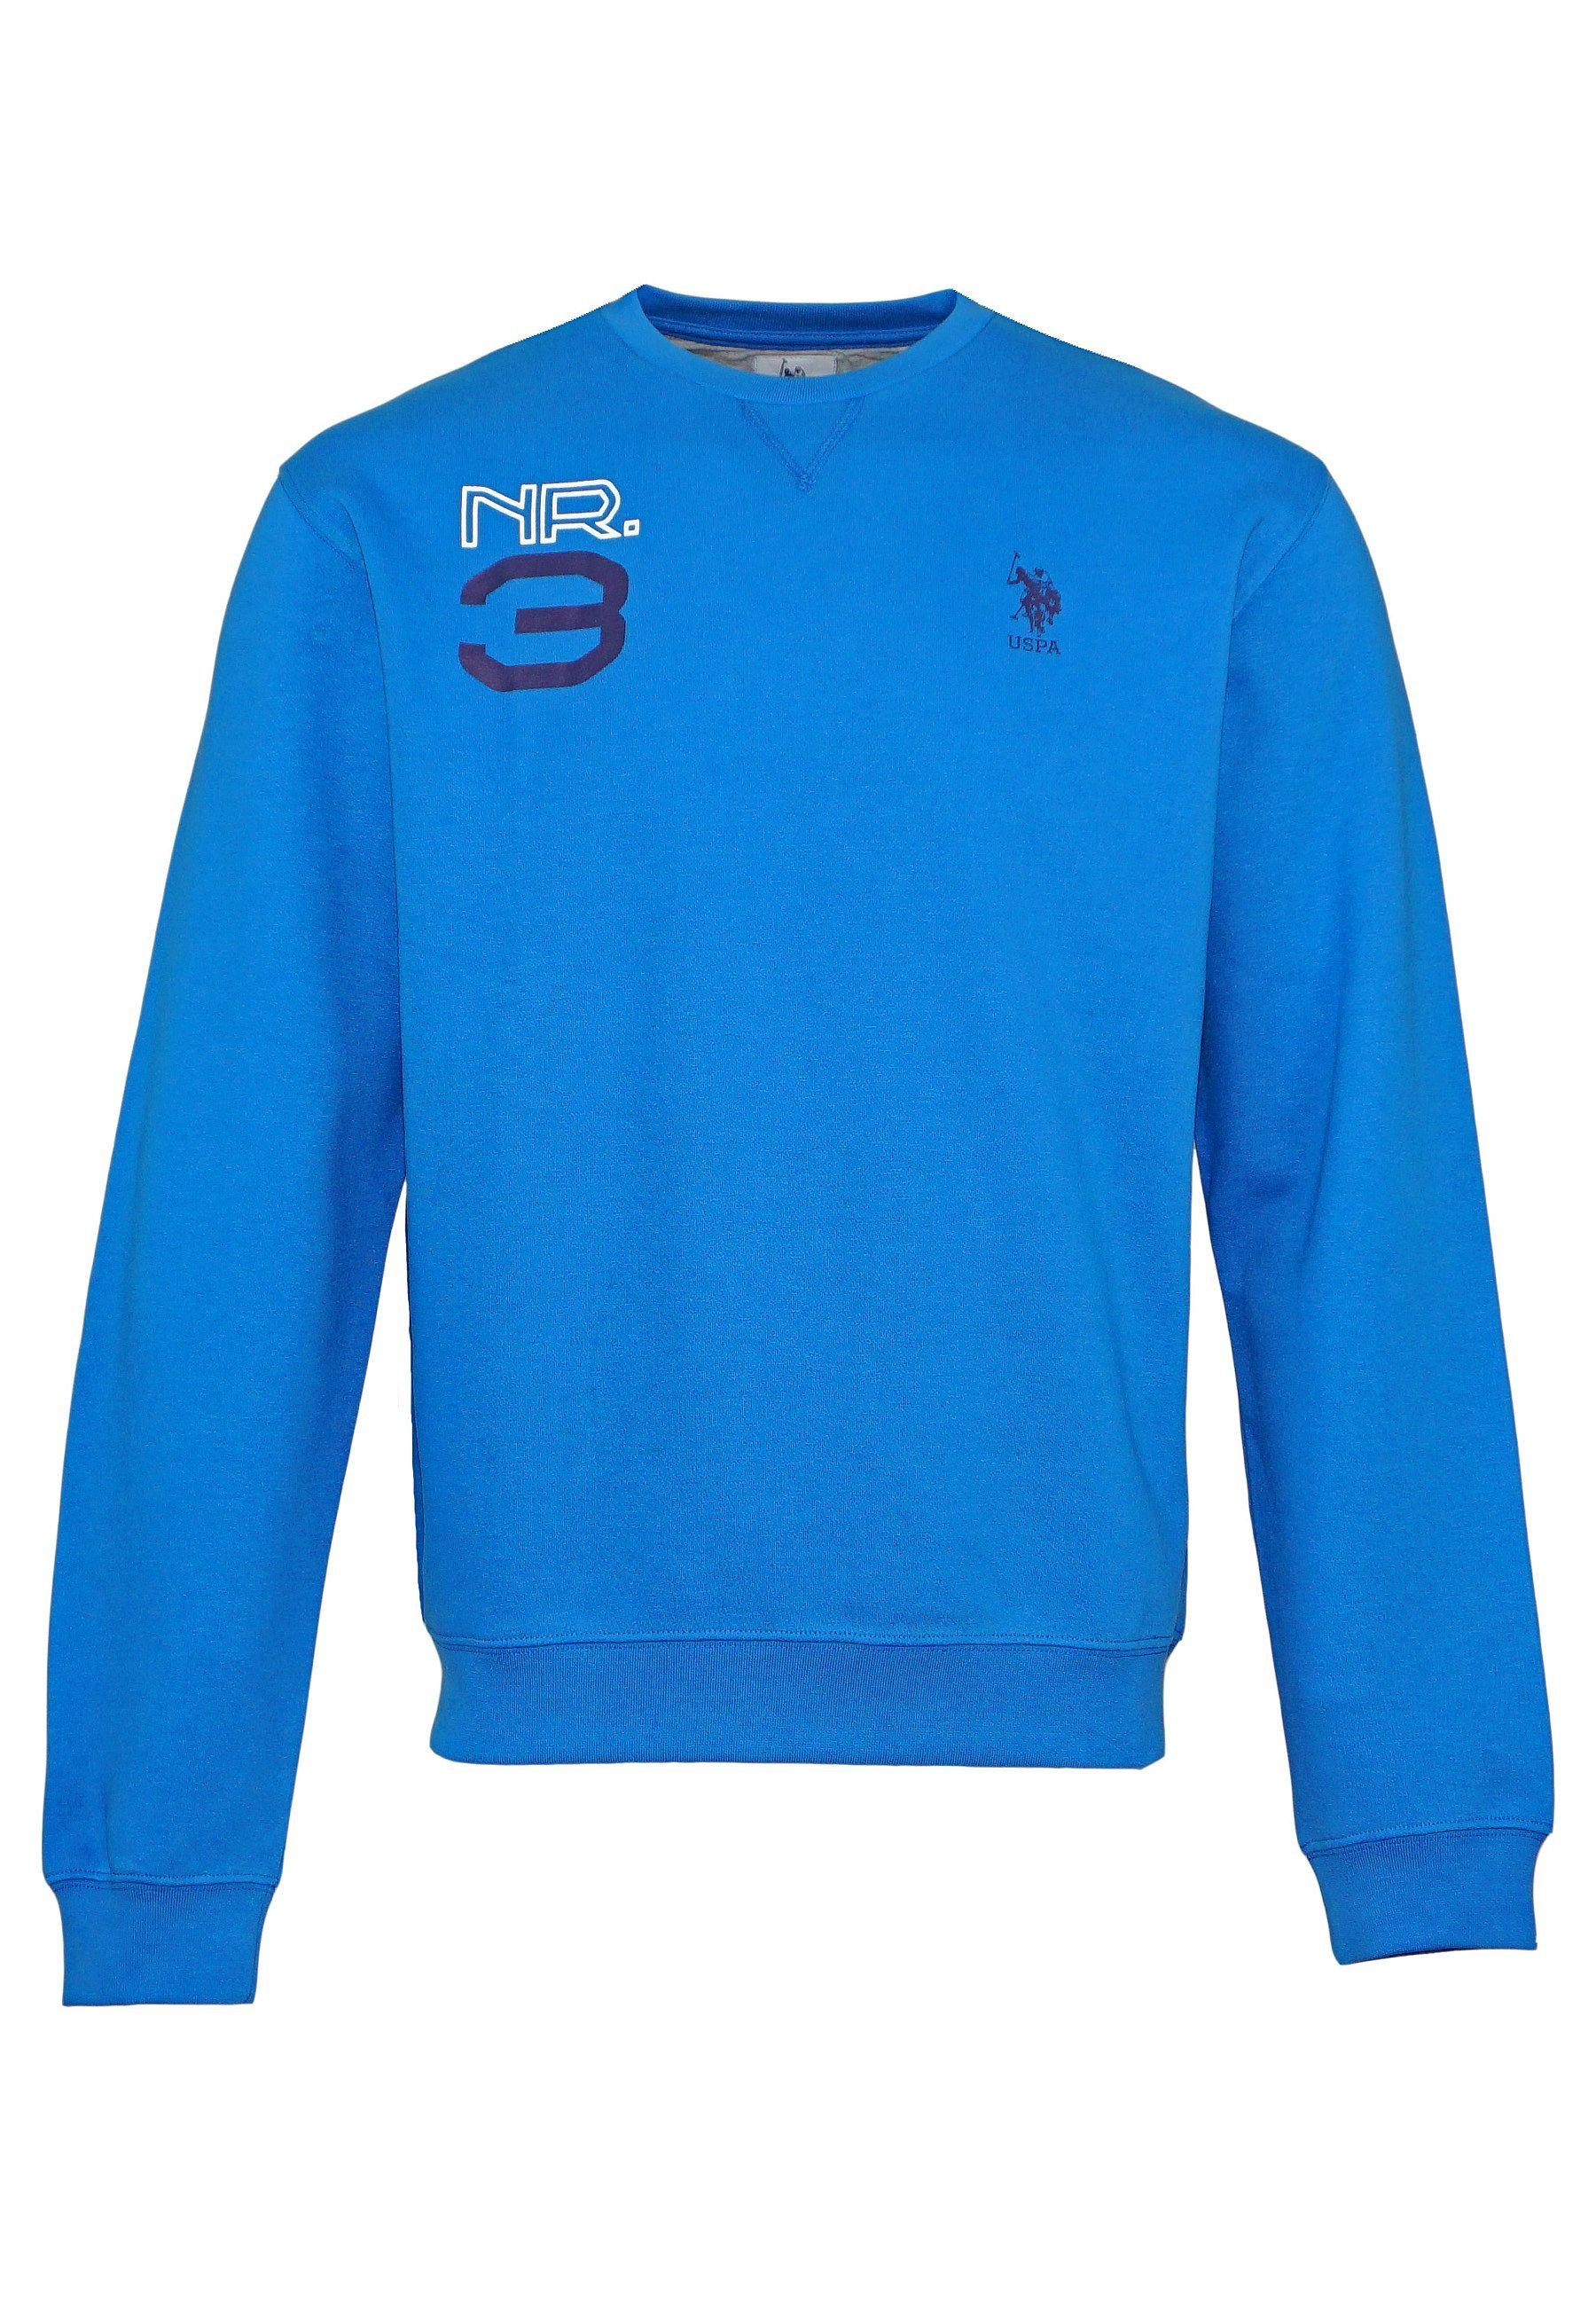 U.S. Polo Assn Sweatshirt Pullover Sweatshirt Pro Rundhals blau